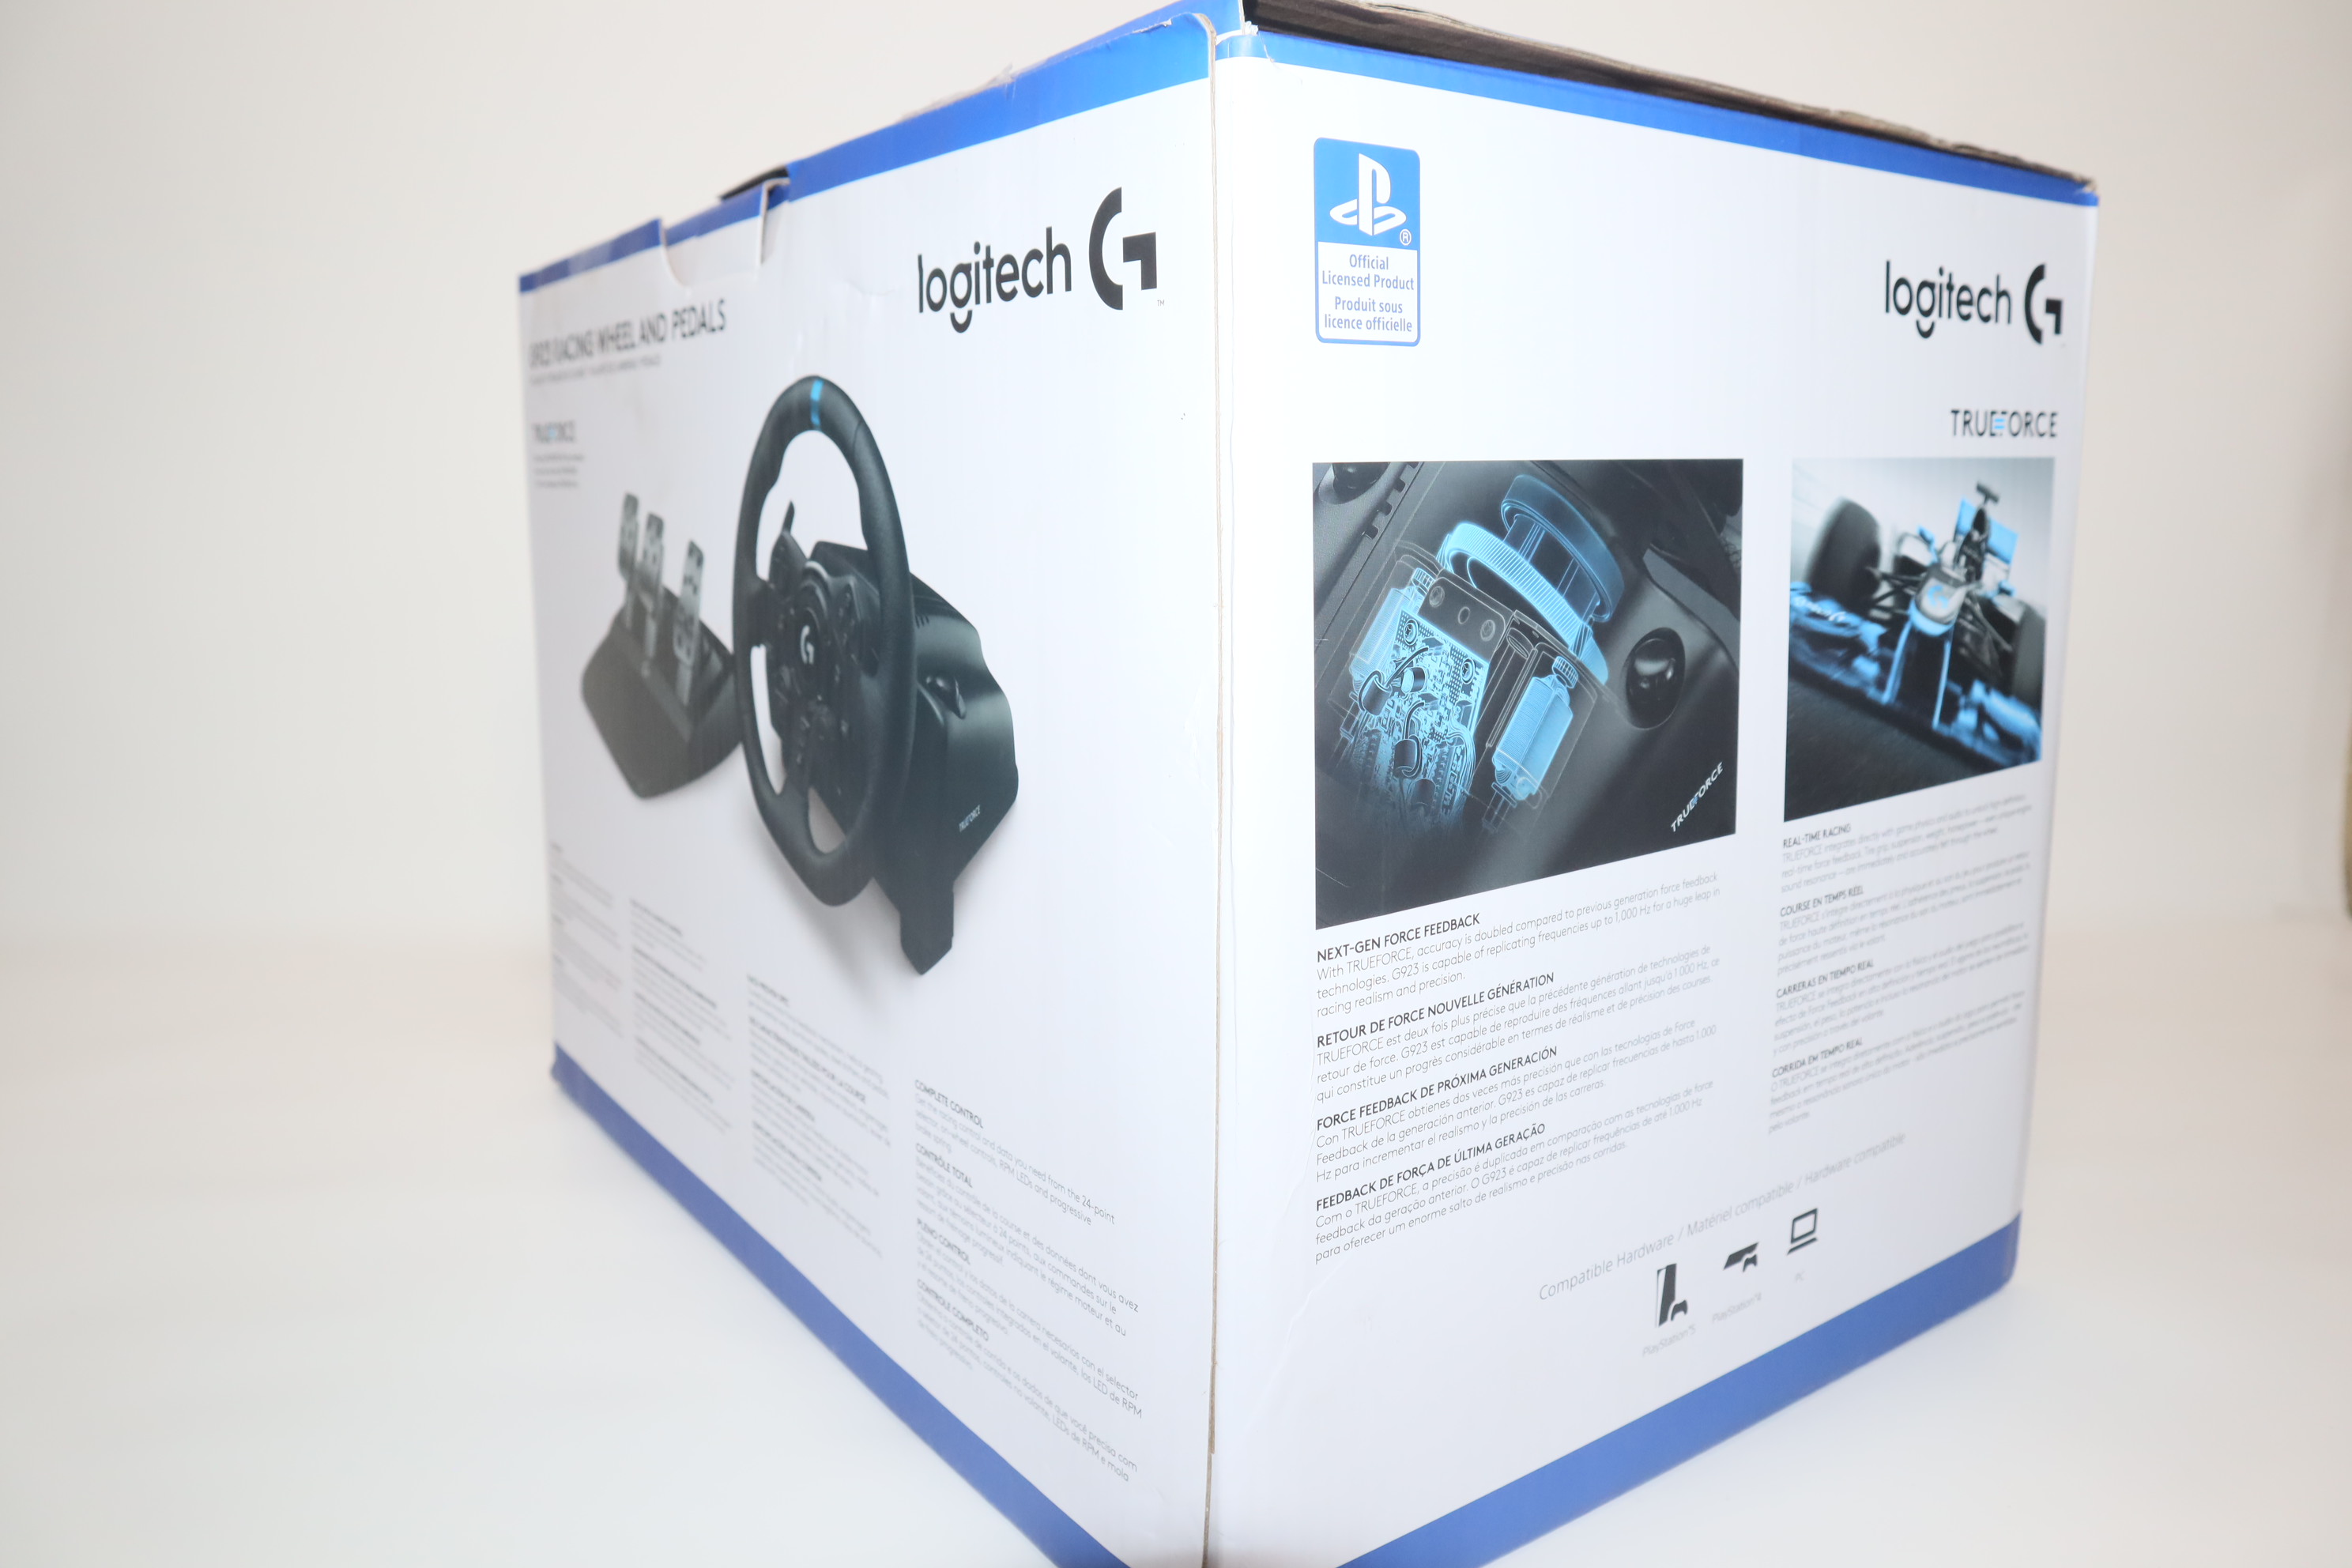 Logitech G923 PS5/PS4/PC TRUEFORCE Racing Wheel & Pedals/1000 Hz